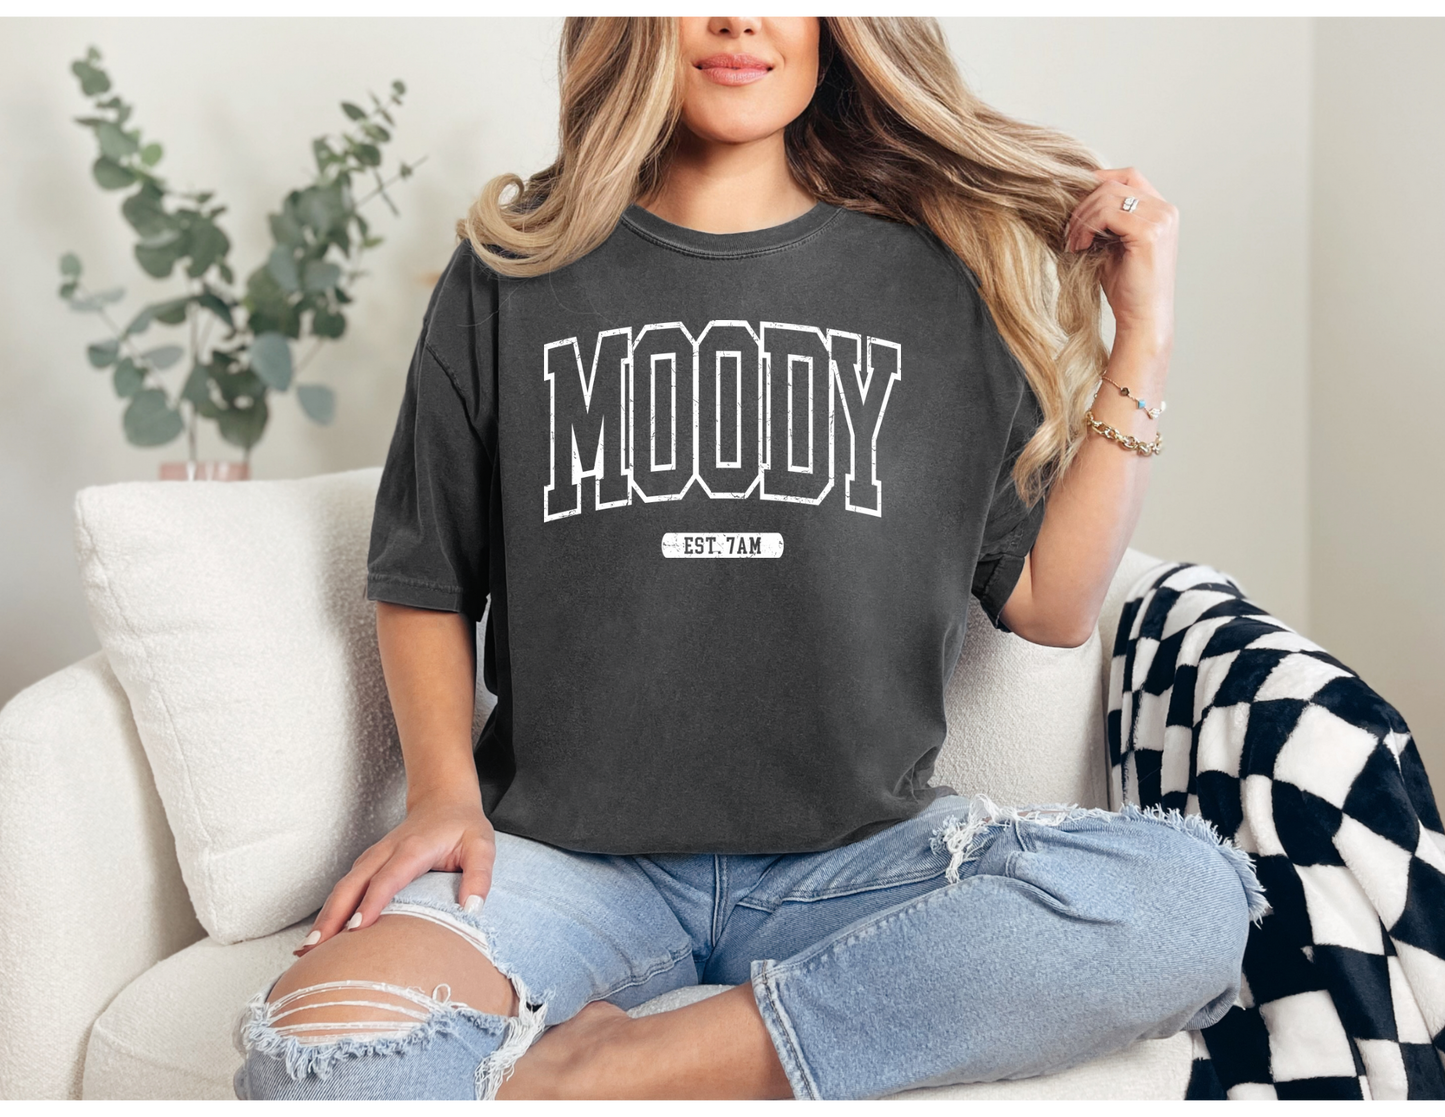 Moody 7am Shirt